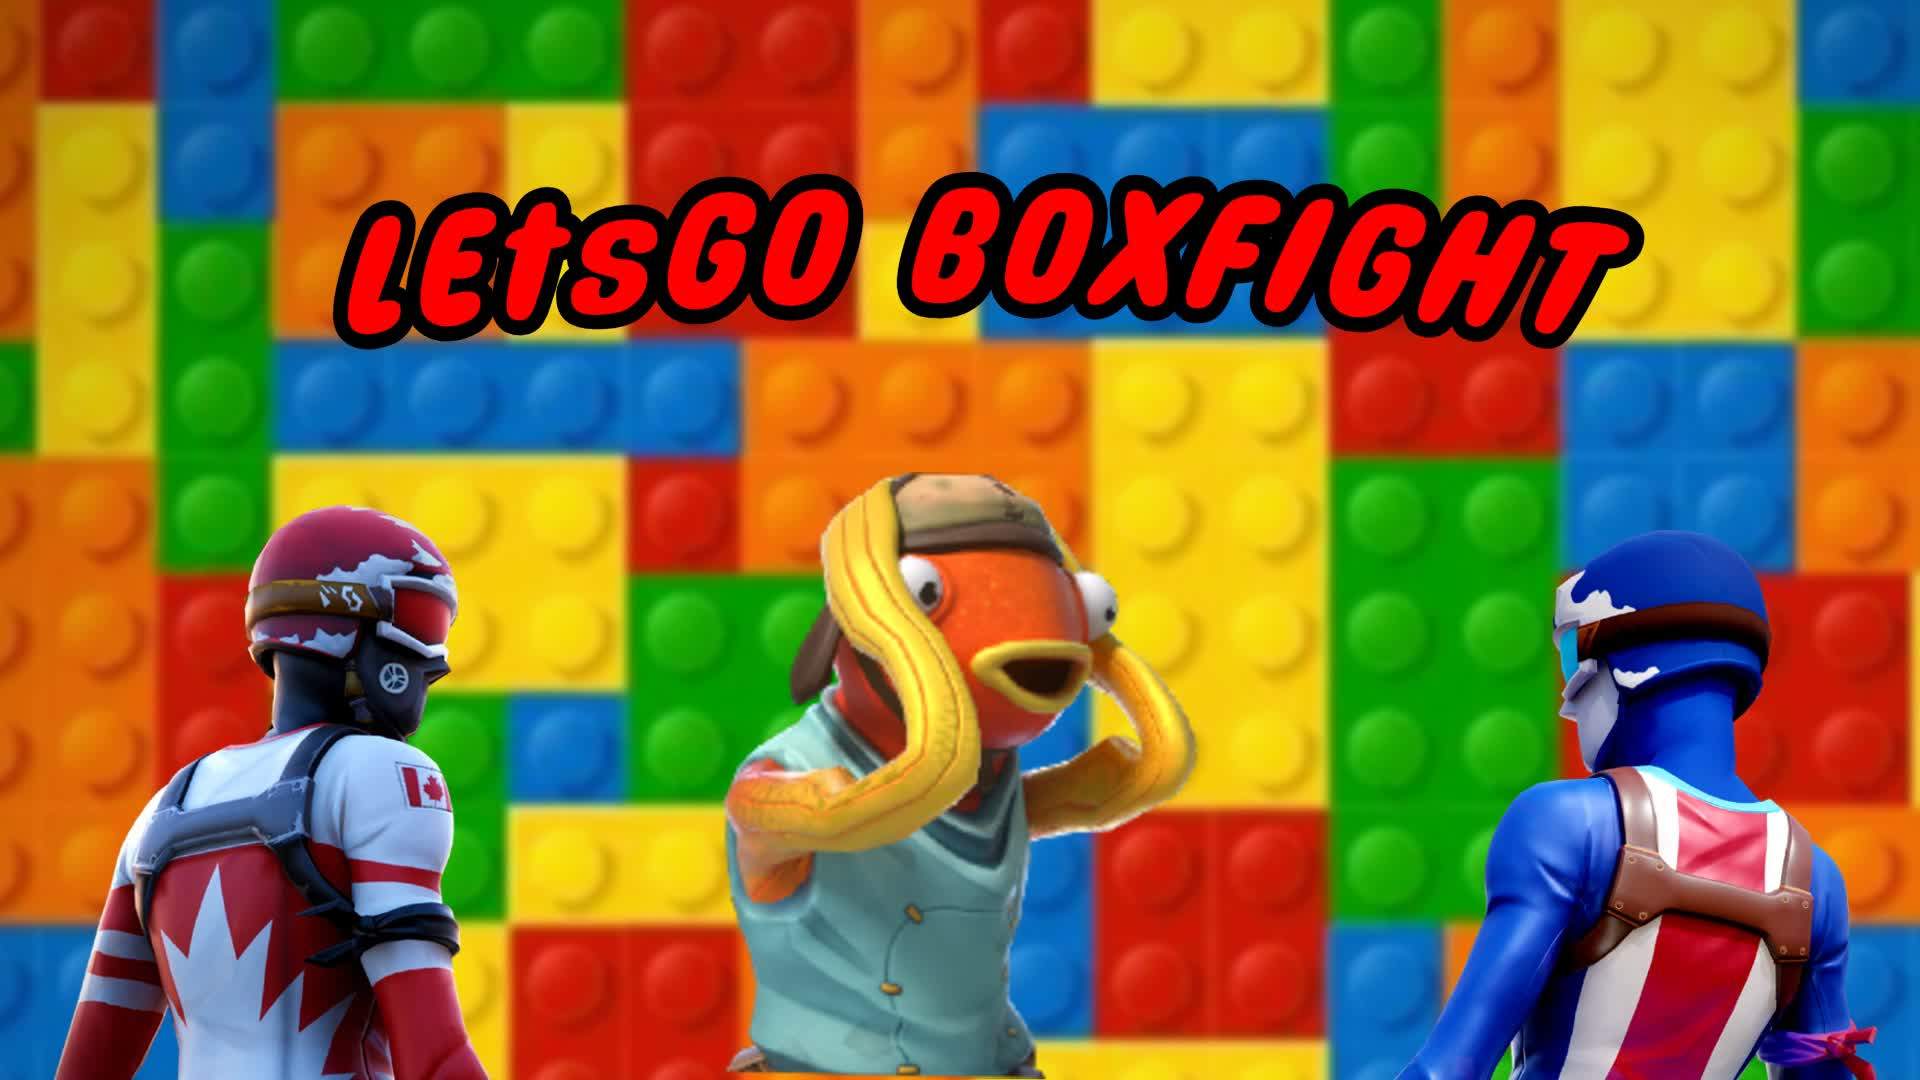 LEtsGO BOXFIGHT